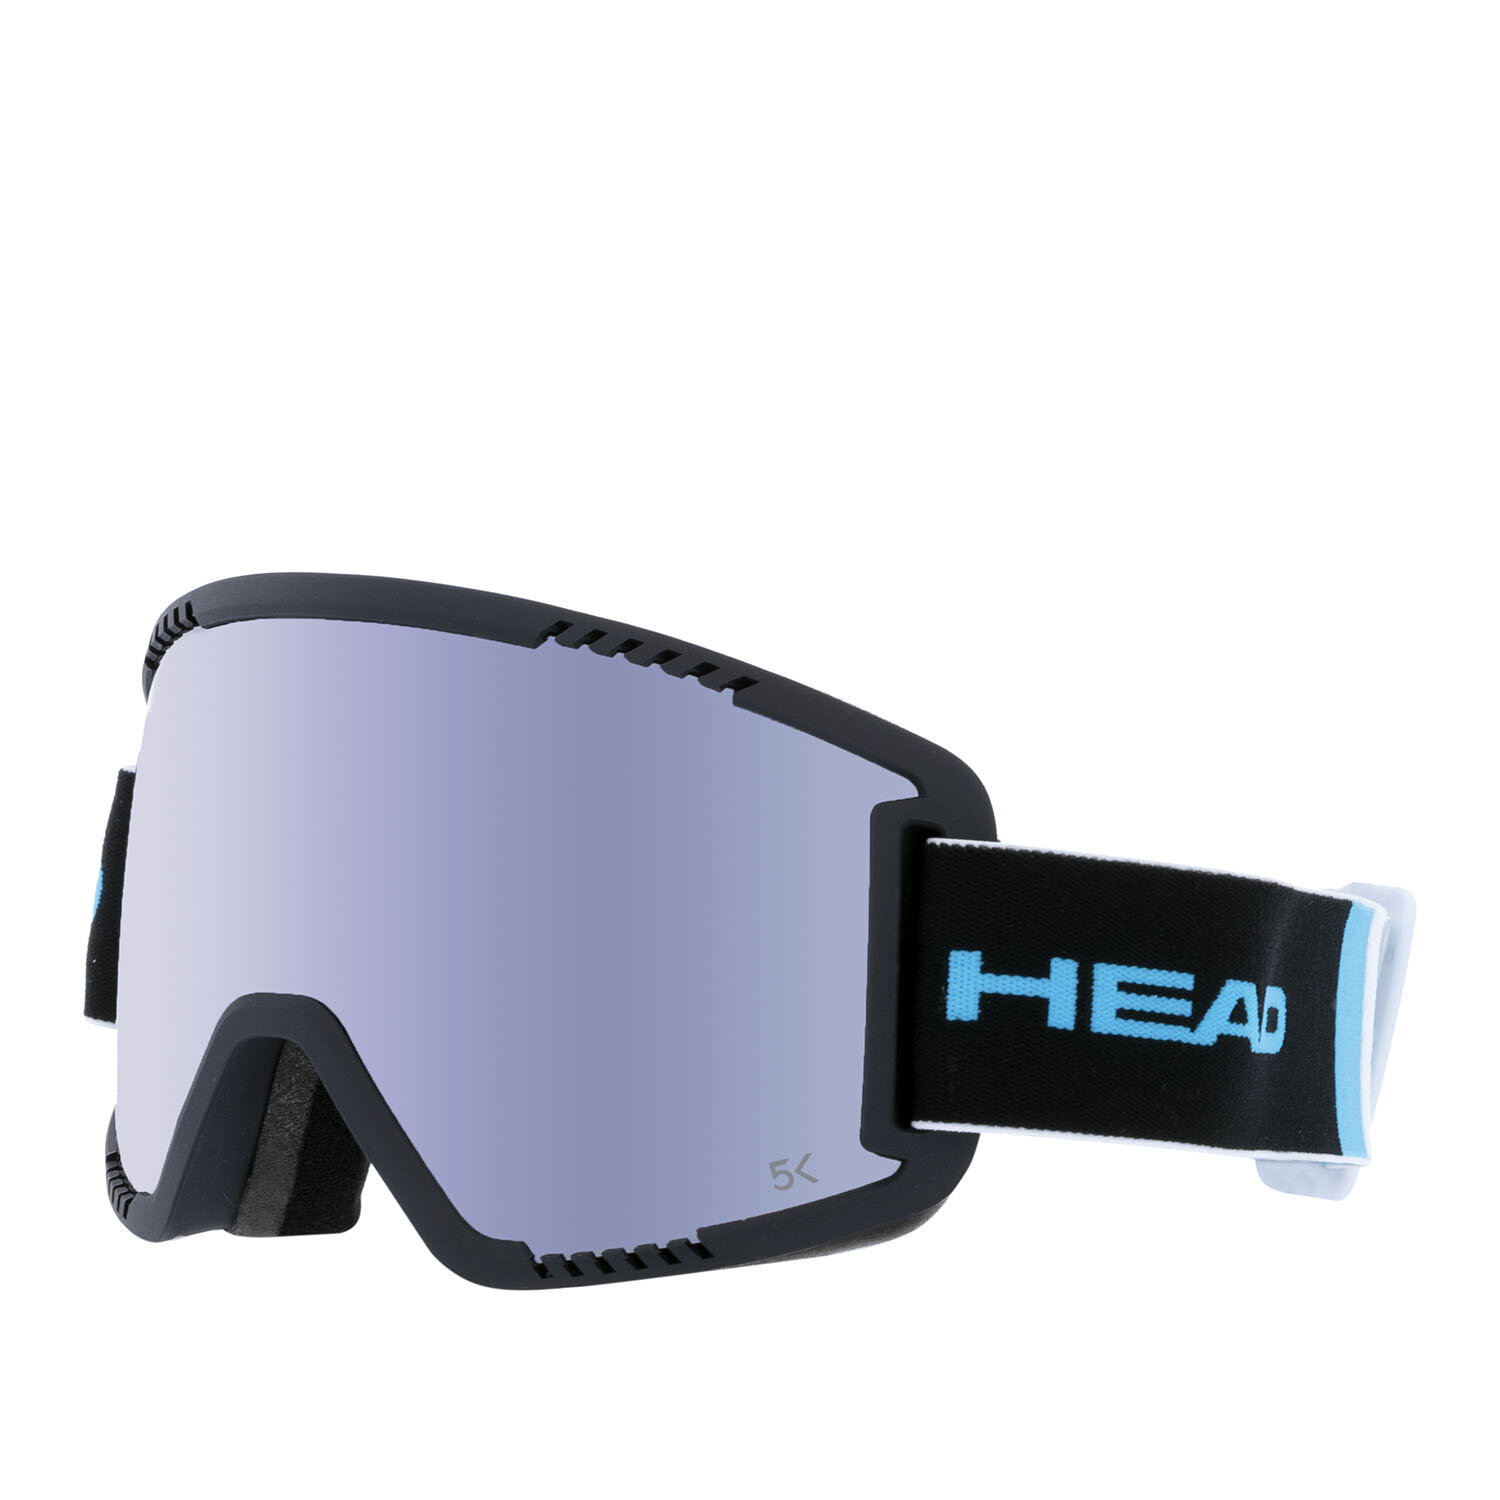 Очки горнолыжные HEAD Contex Pro 5K Race Rd+Sl L 5K Black/Blue Wcr/Chrome